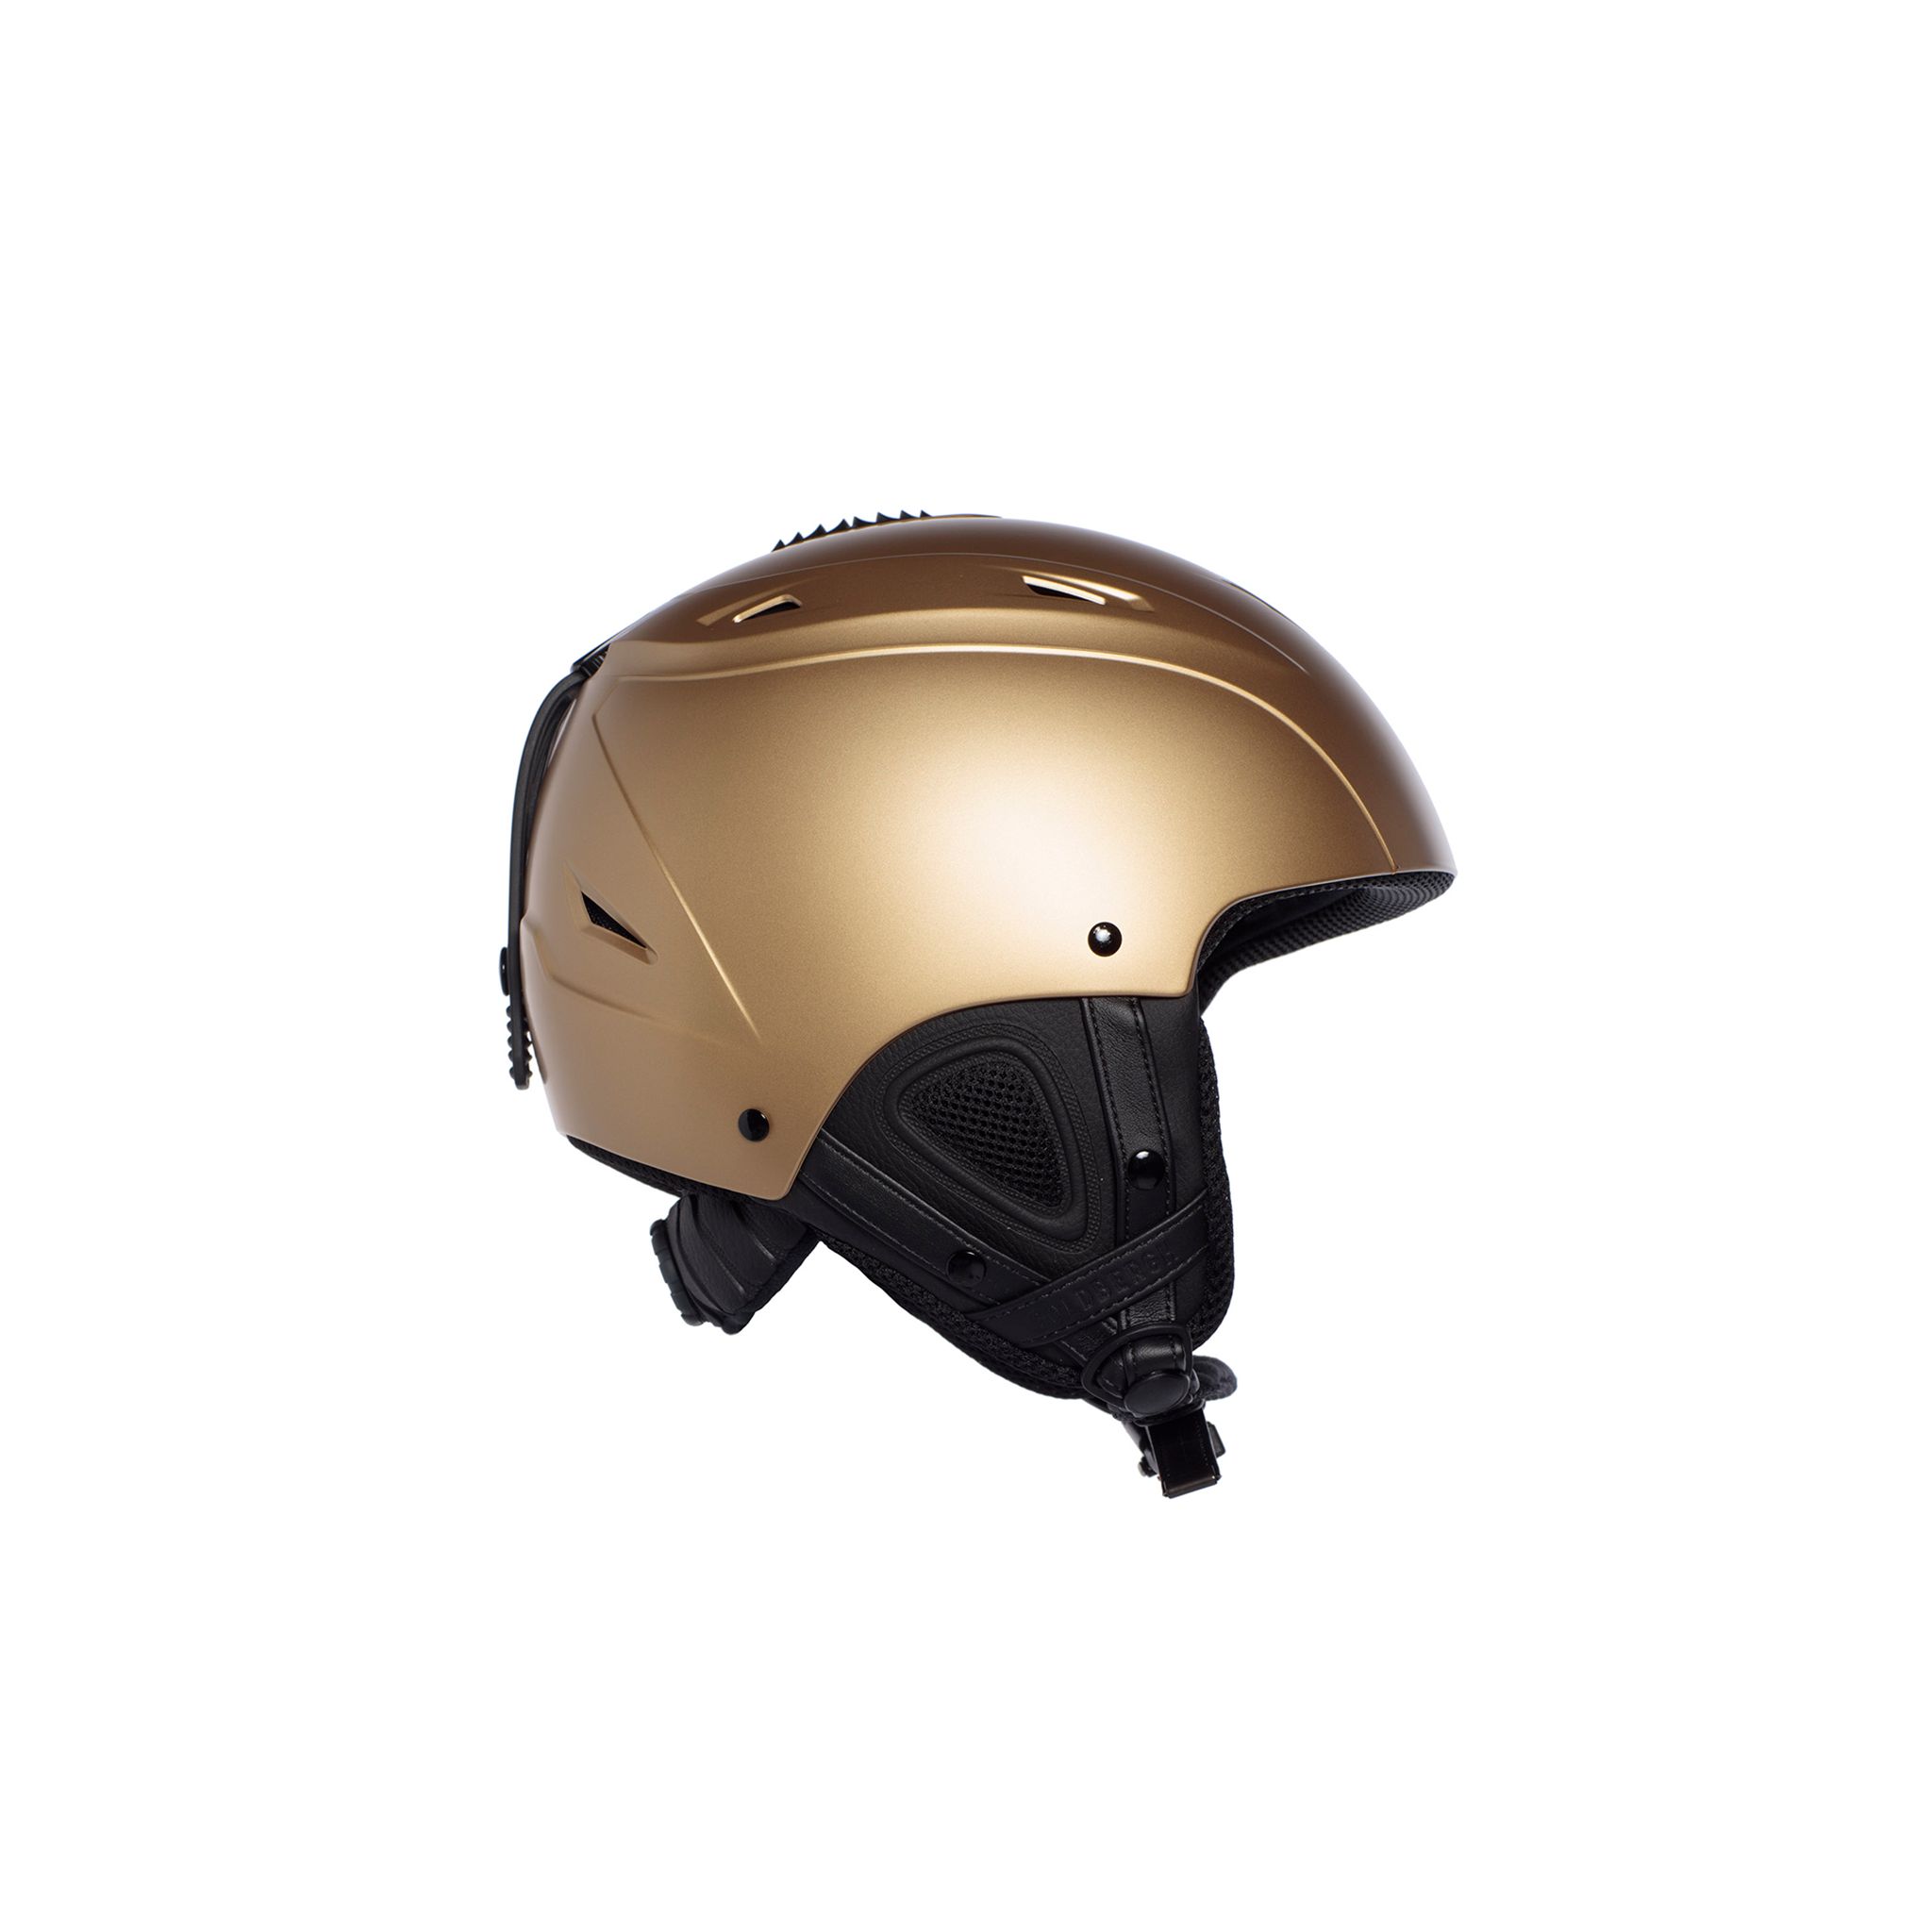  Cască Ski  -  goldbergh KHLOE Helmet